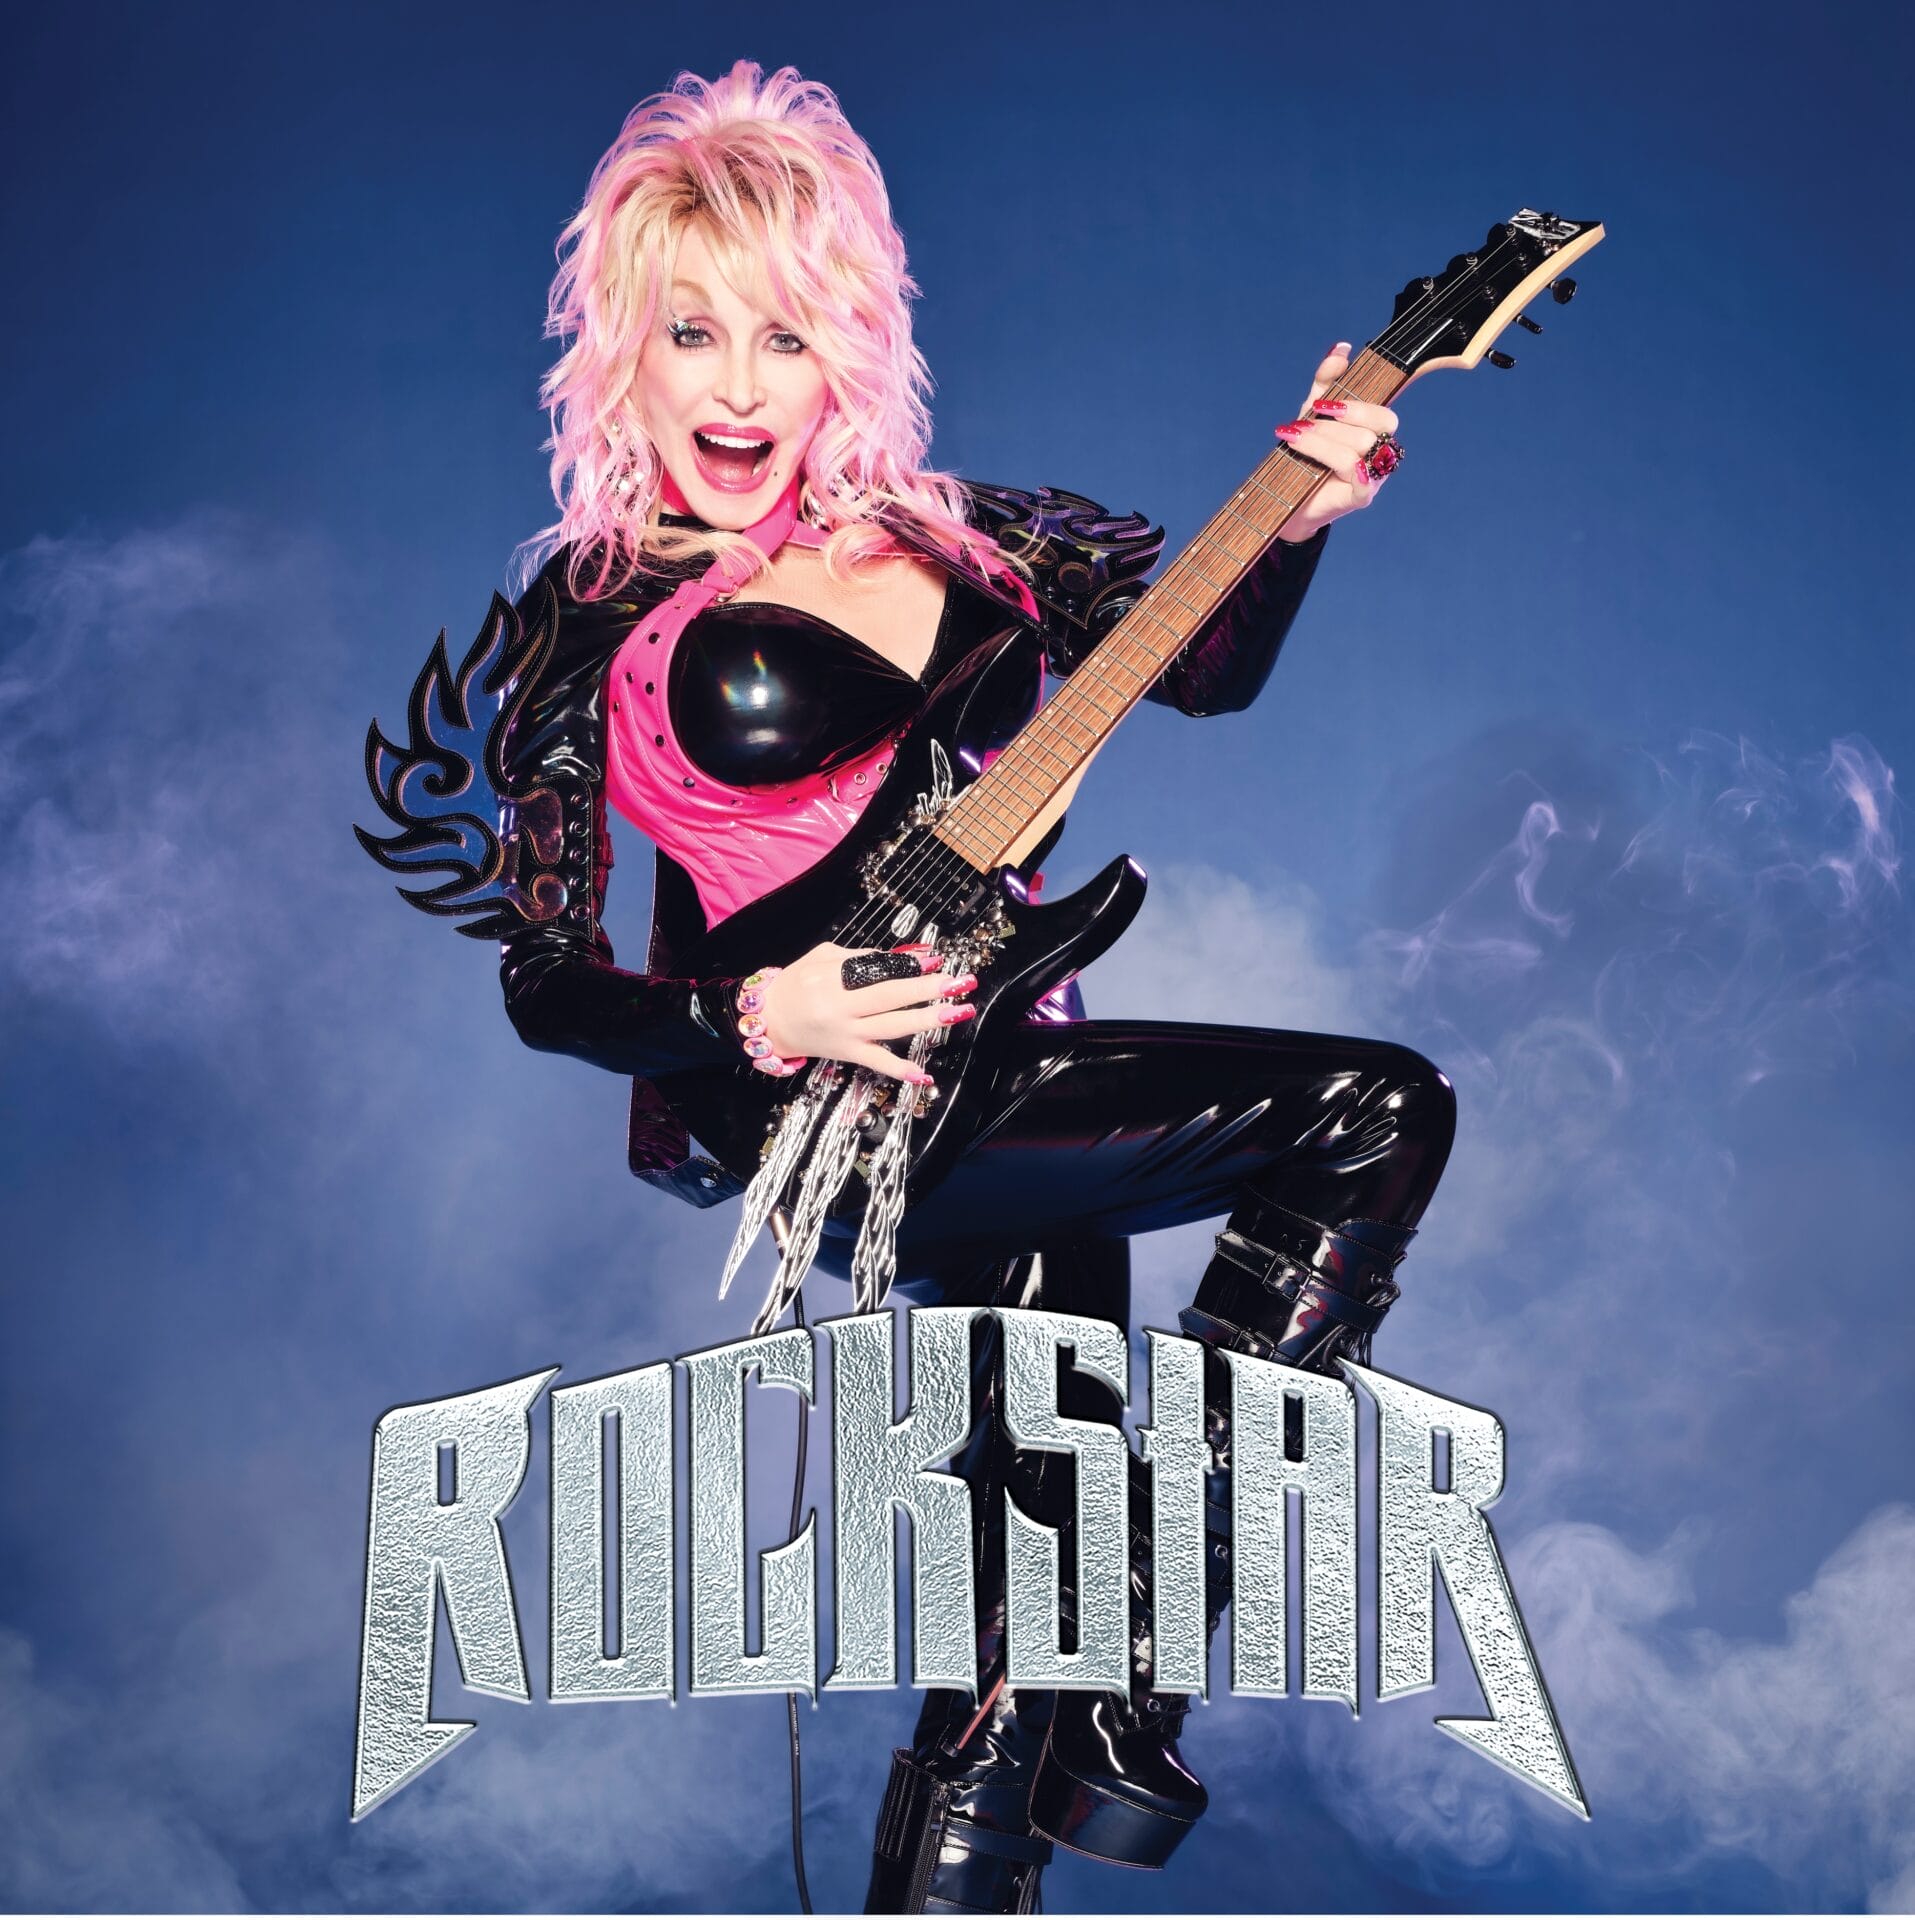 Dolly Parton Takes “Jolene” to Rock Era with New Recording, Featuring Måneskin